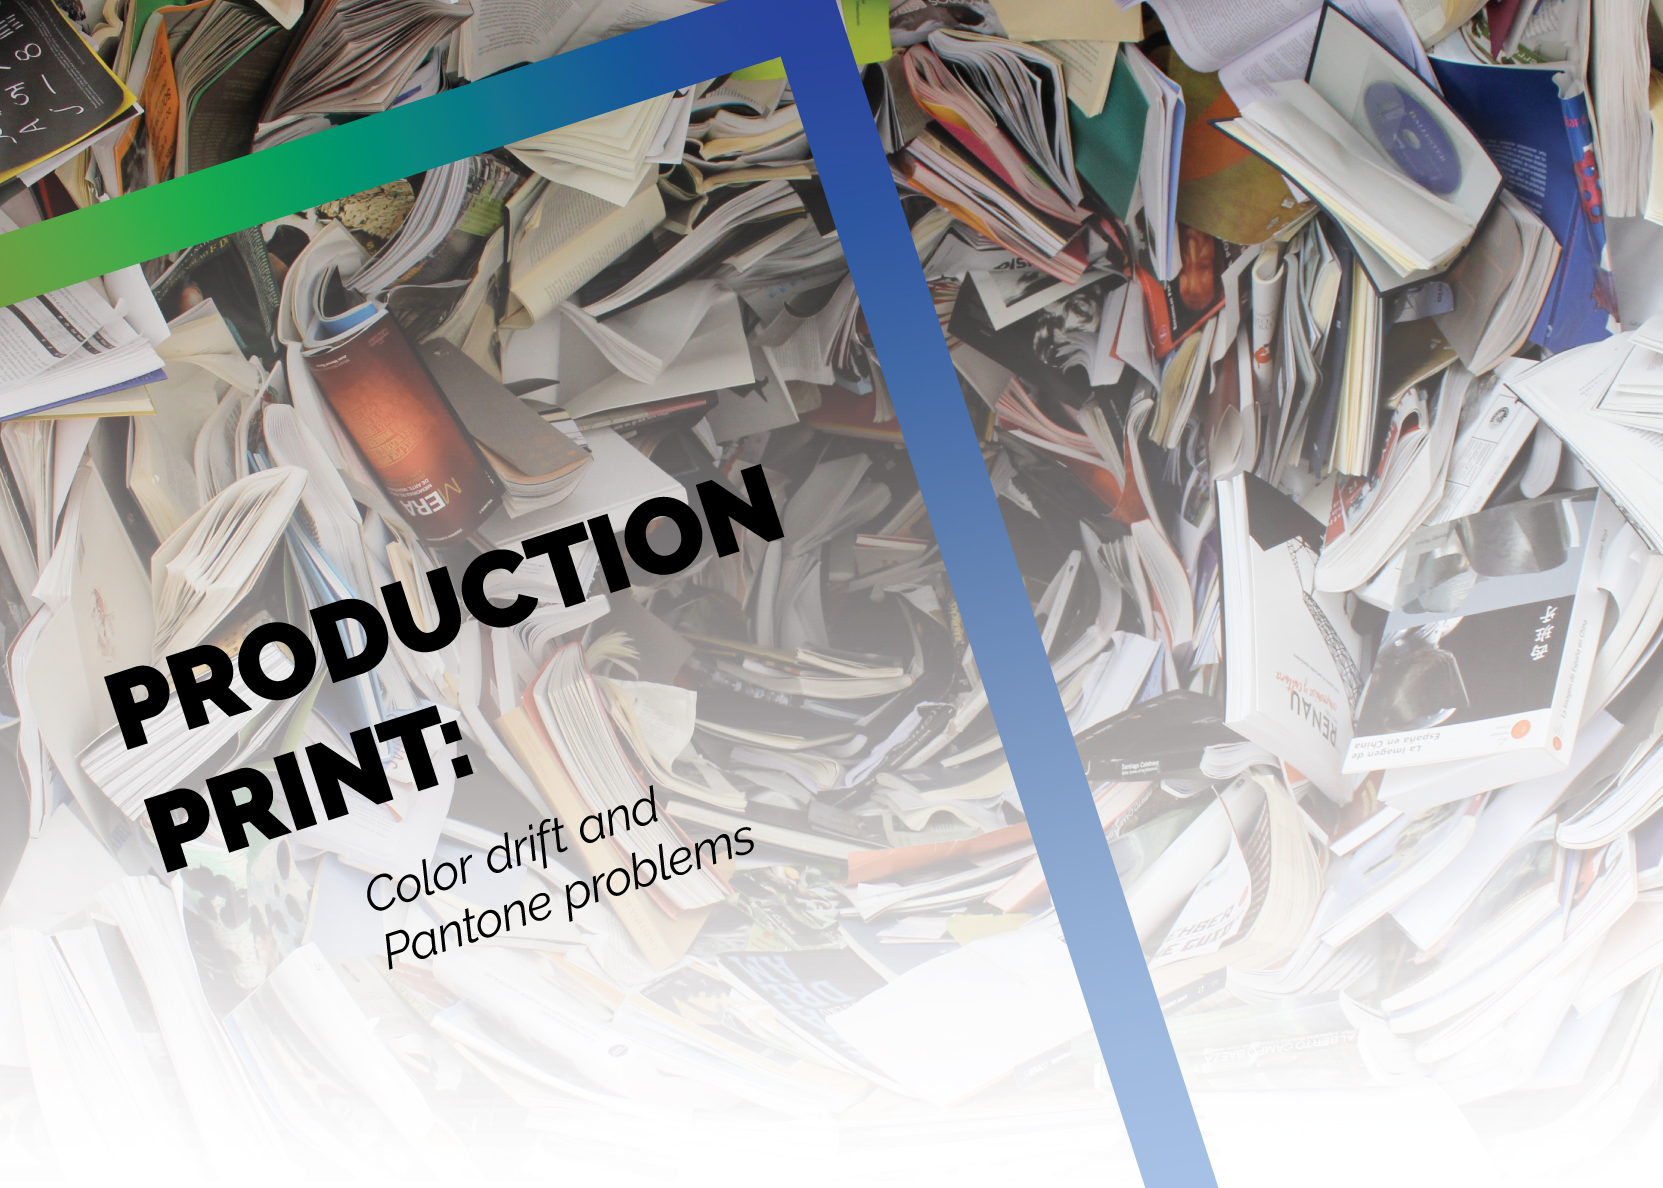 Production Print - Color Drift and Pantone Problems